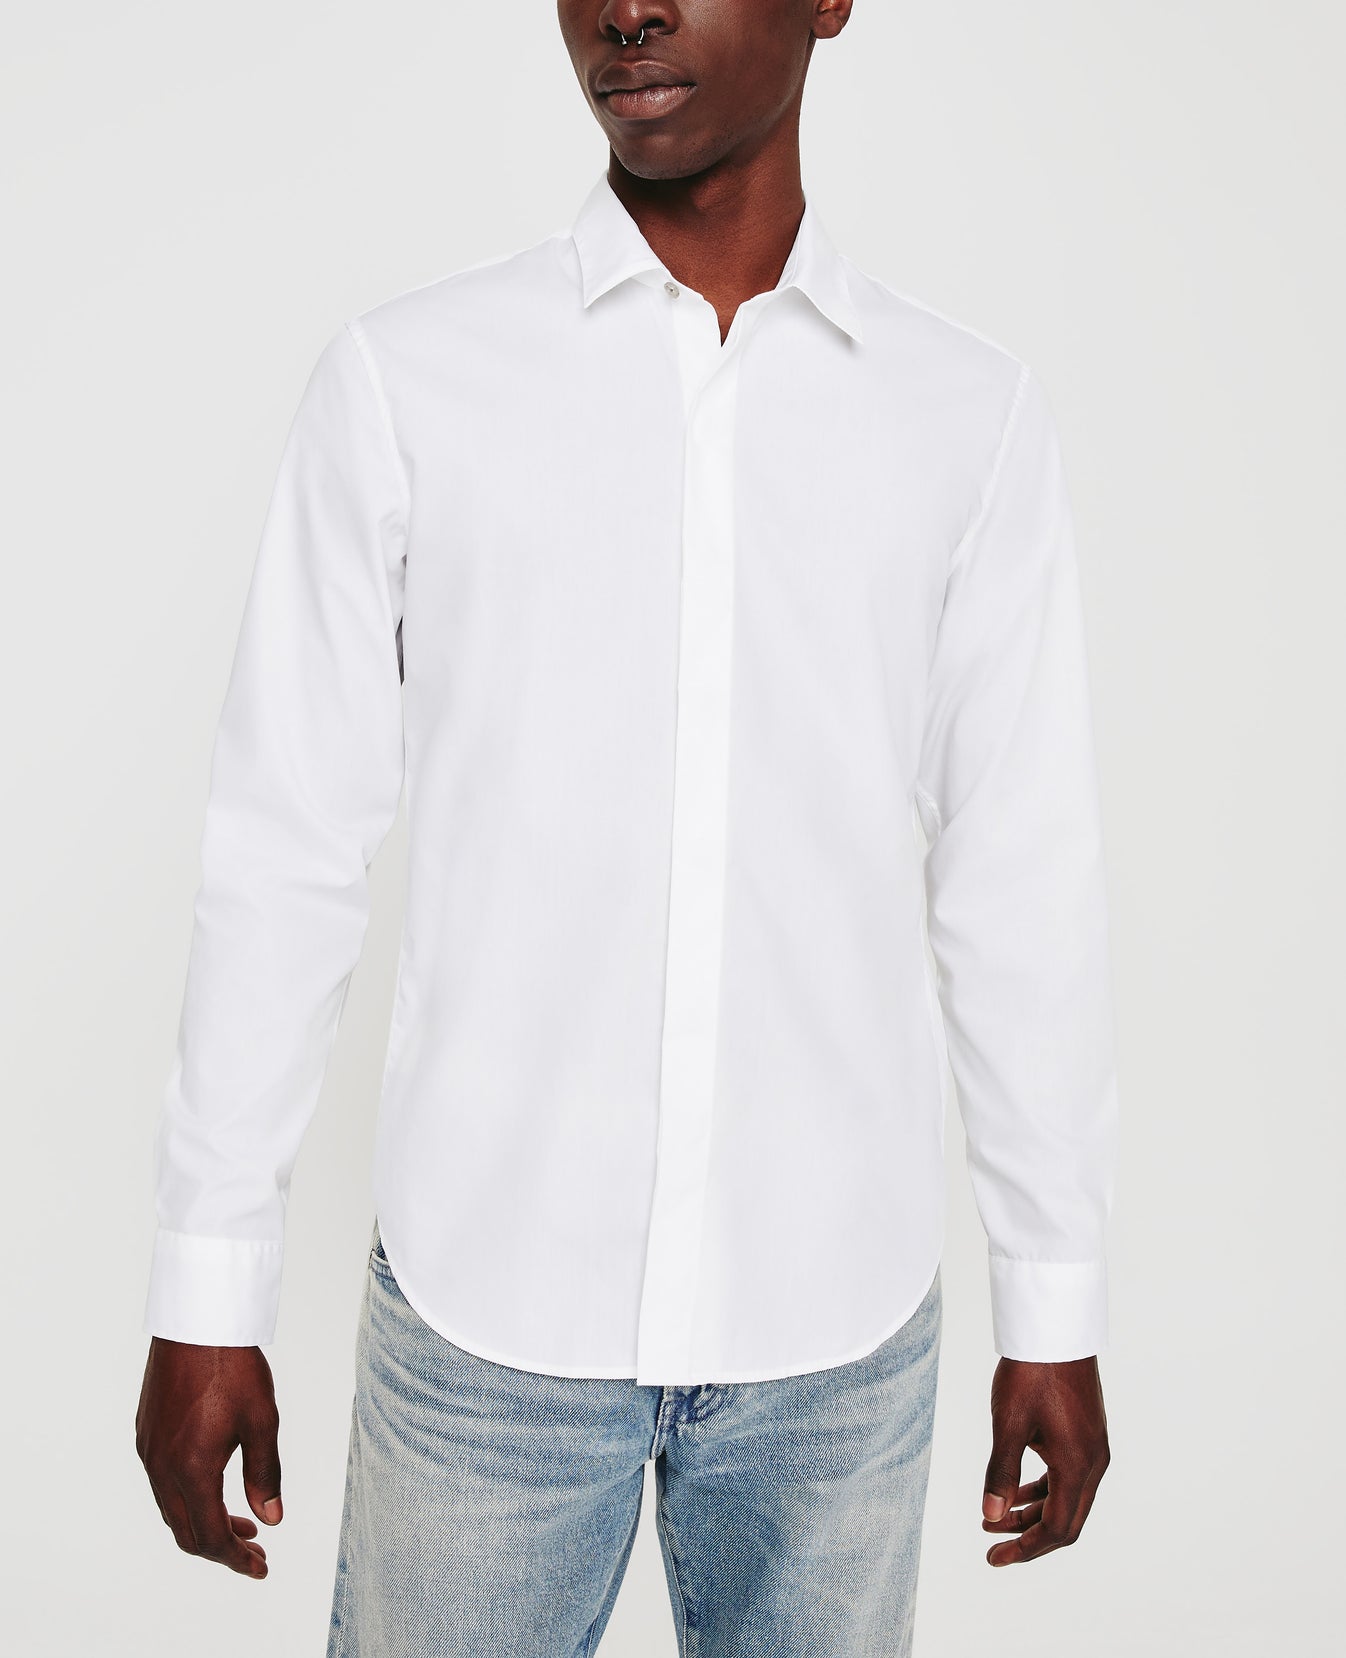 Ace Dress Shirt True White Long Sleeve Shirt Men Tops Photo 1